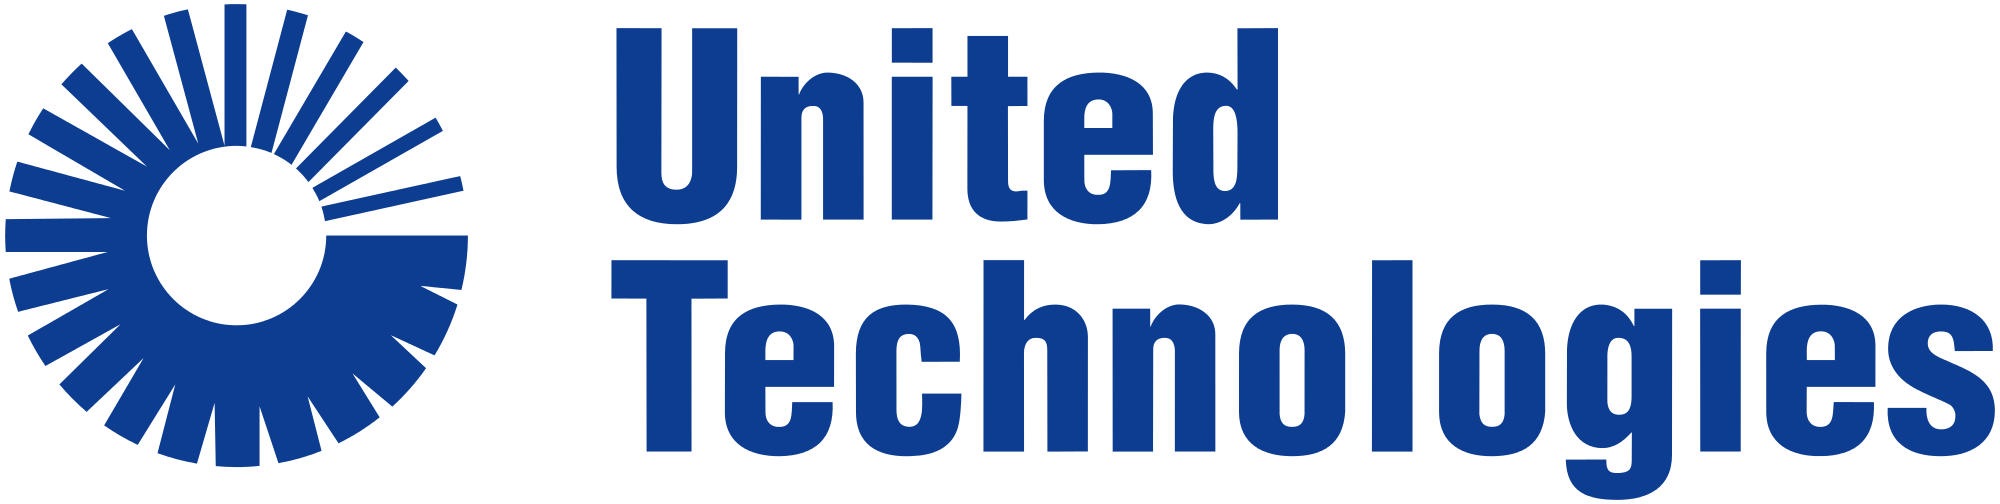 United Technologies Logo - United technologies logo.svg